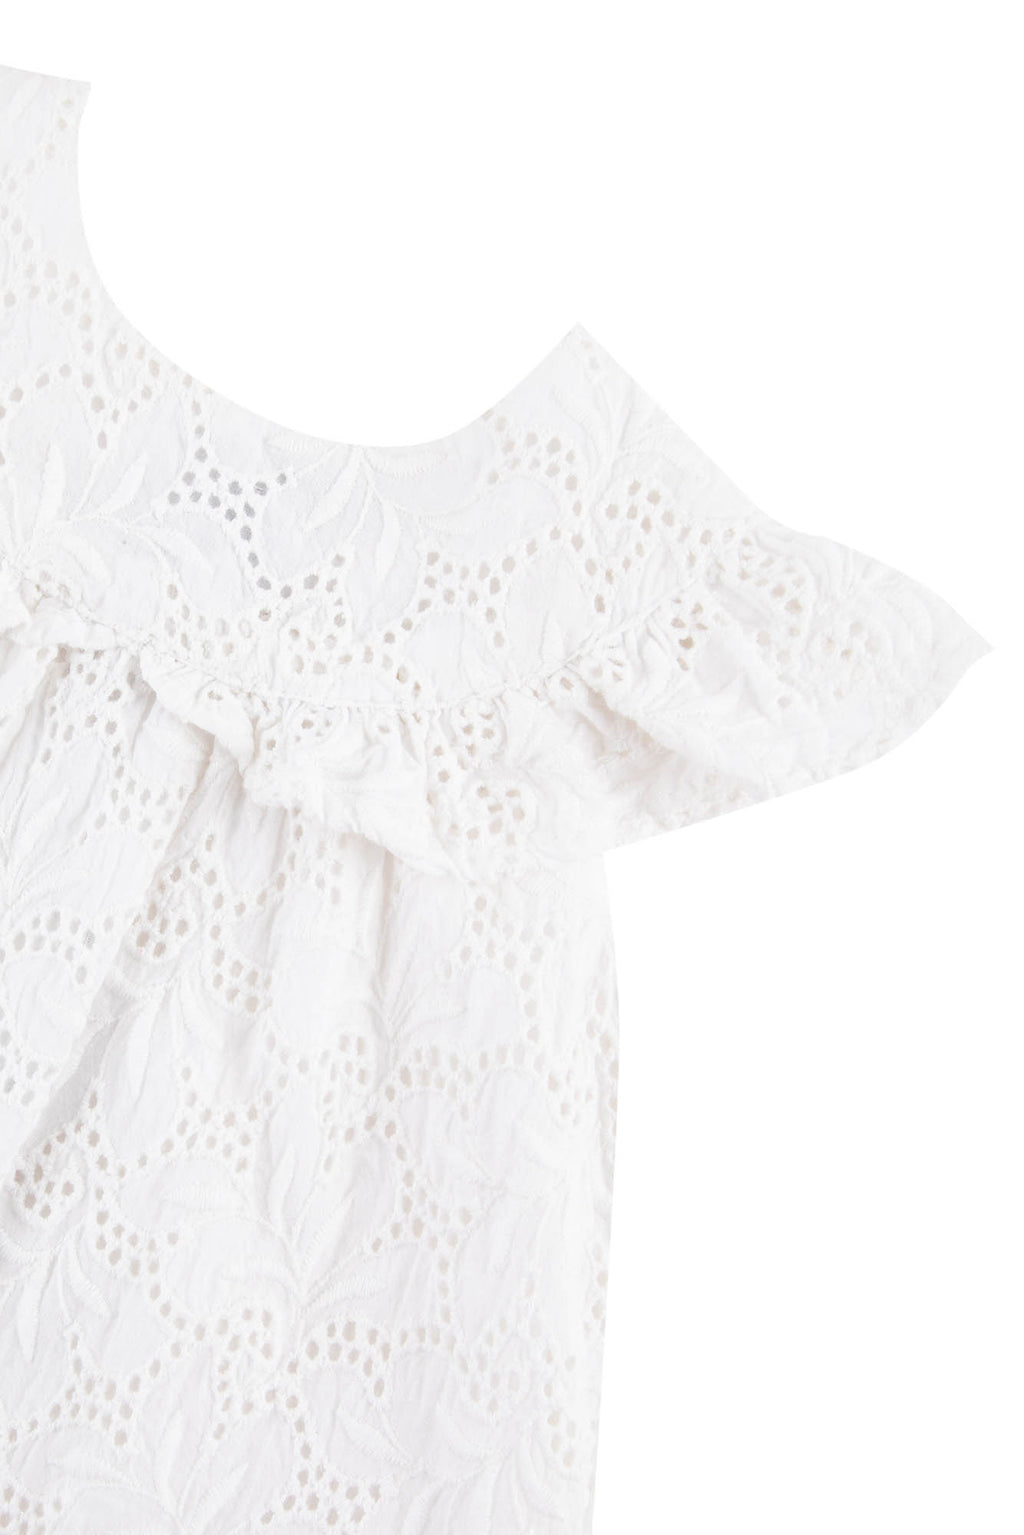 Dress - White English embroidery